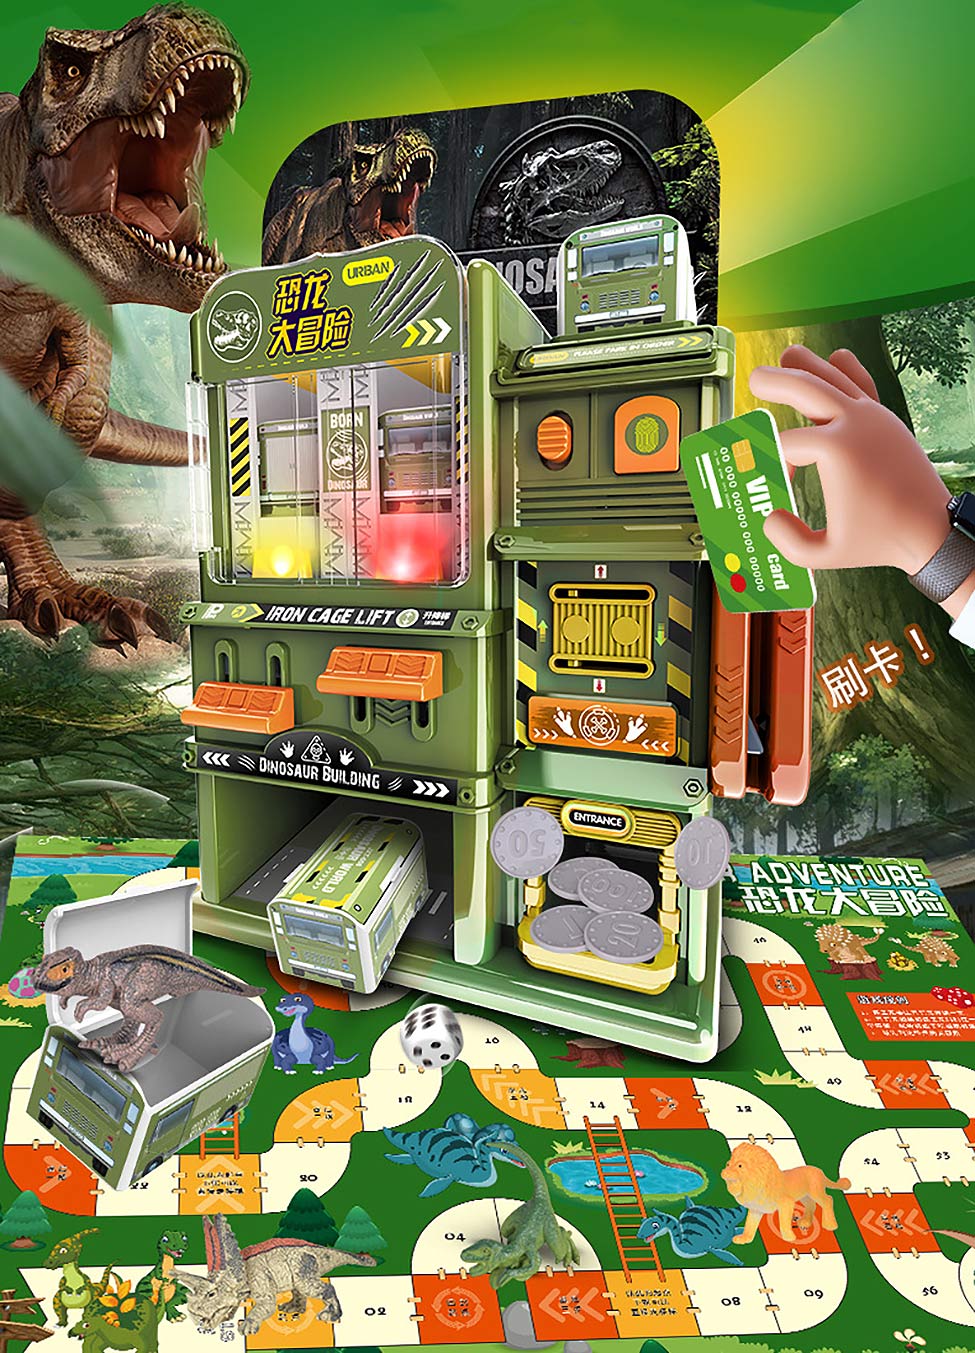 Automatic-Dinosaur-Building-Machine-Vending-Machine-Toy-with-10-Dinosaur-Figurines-6